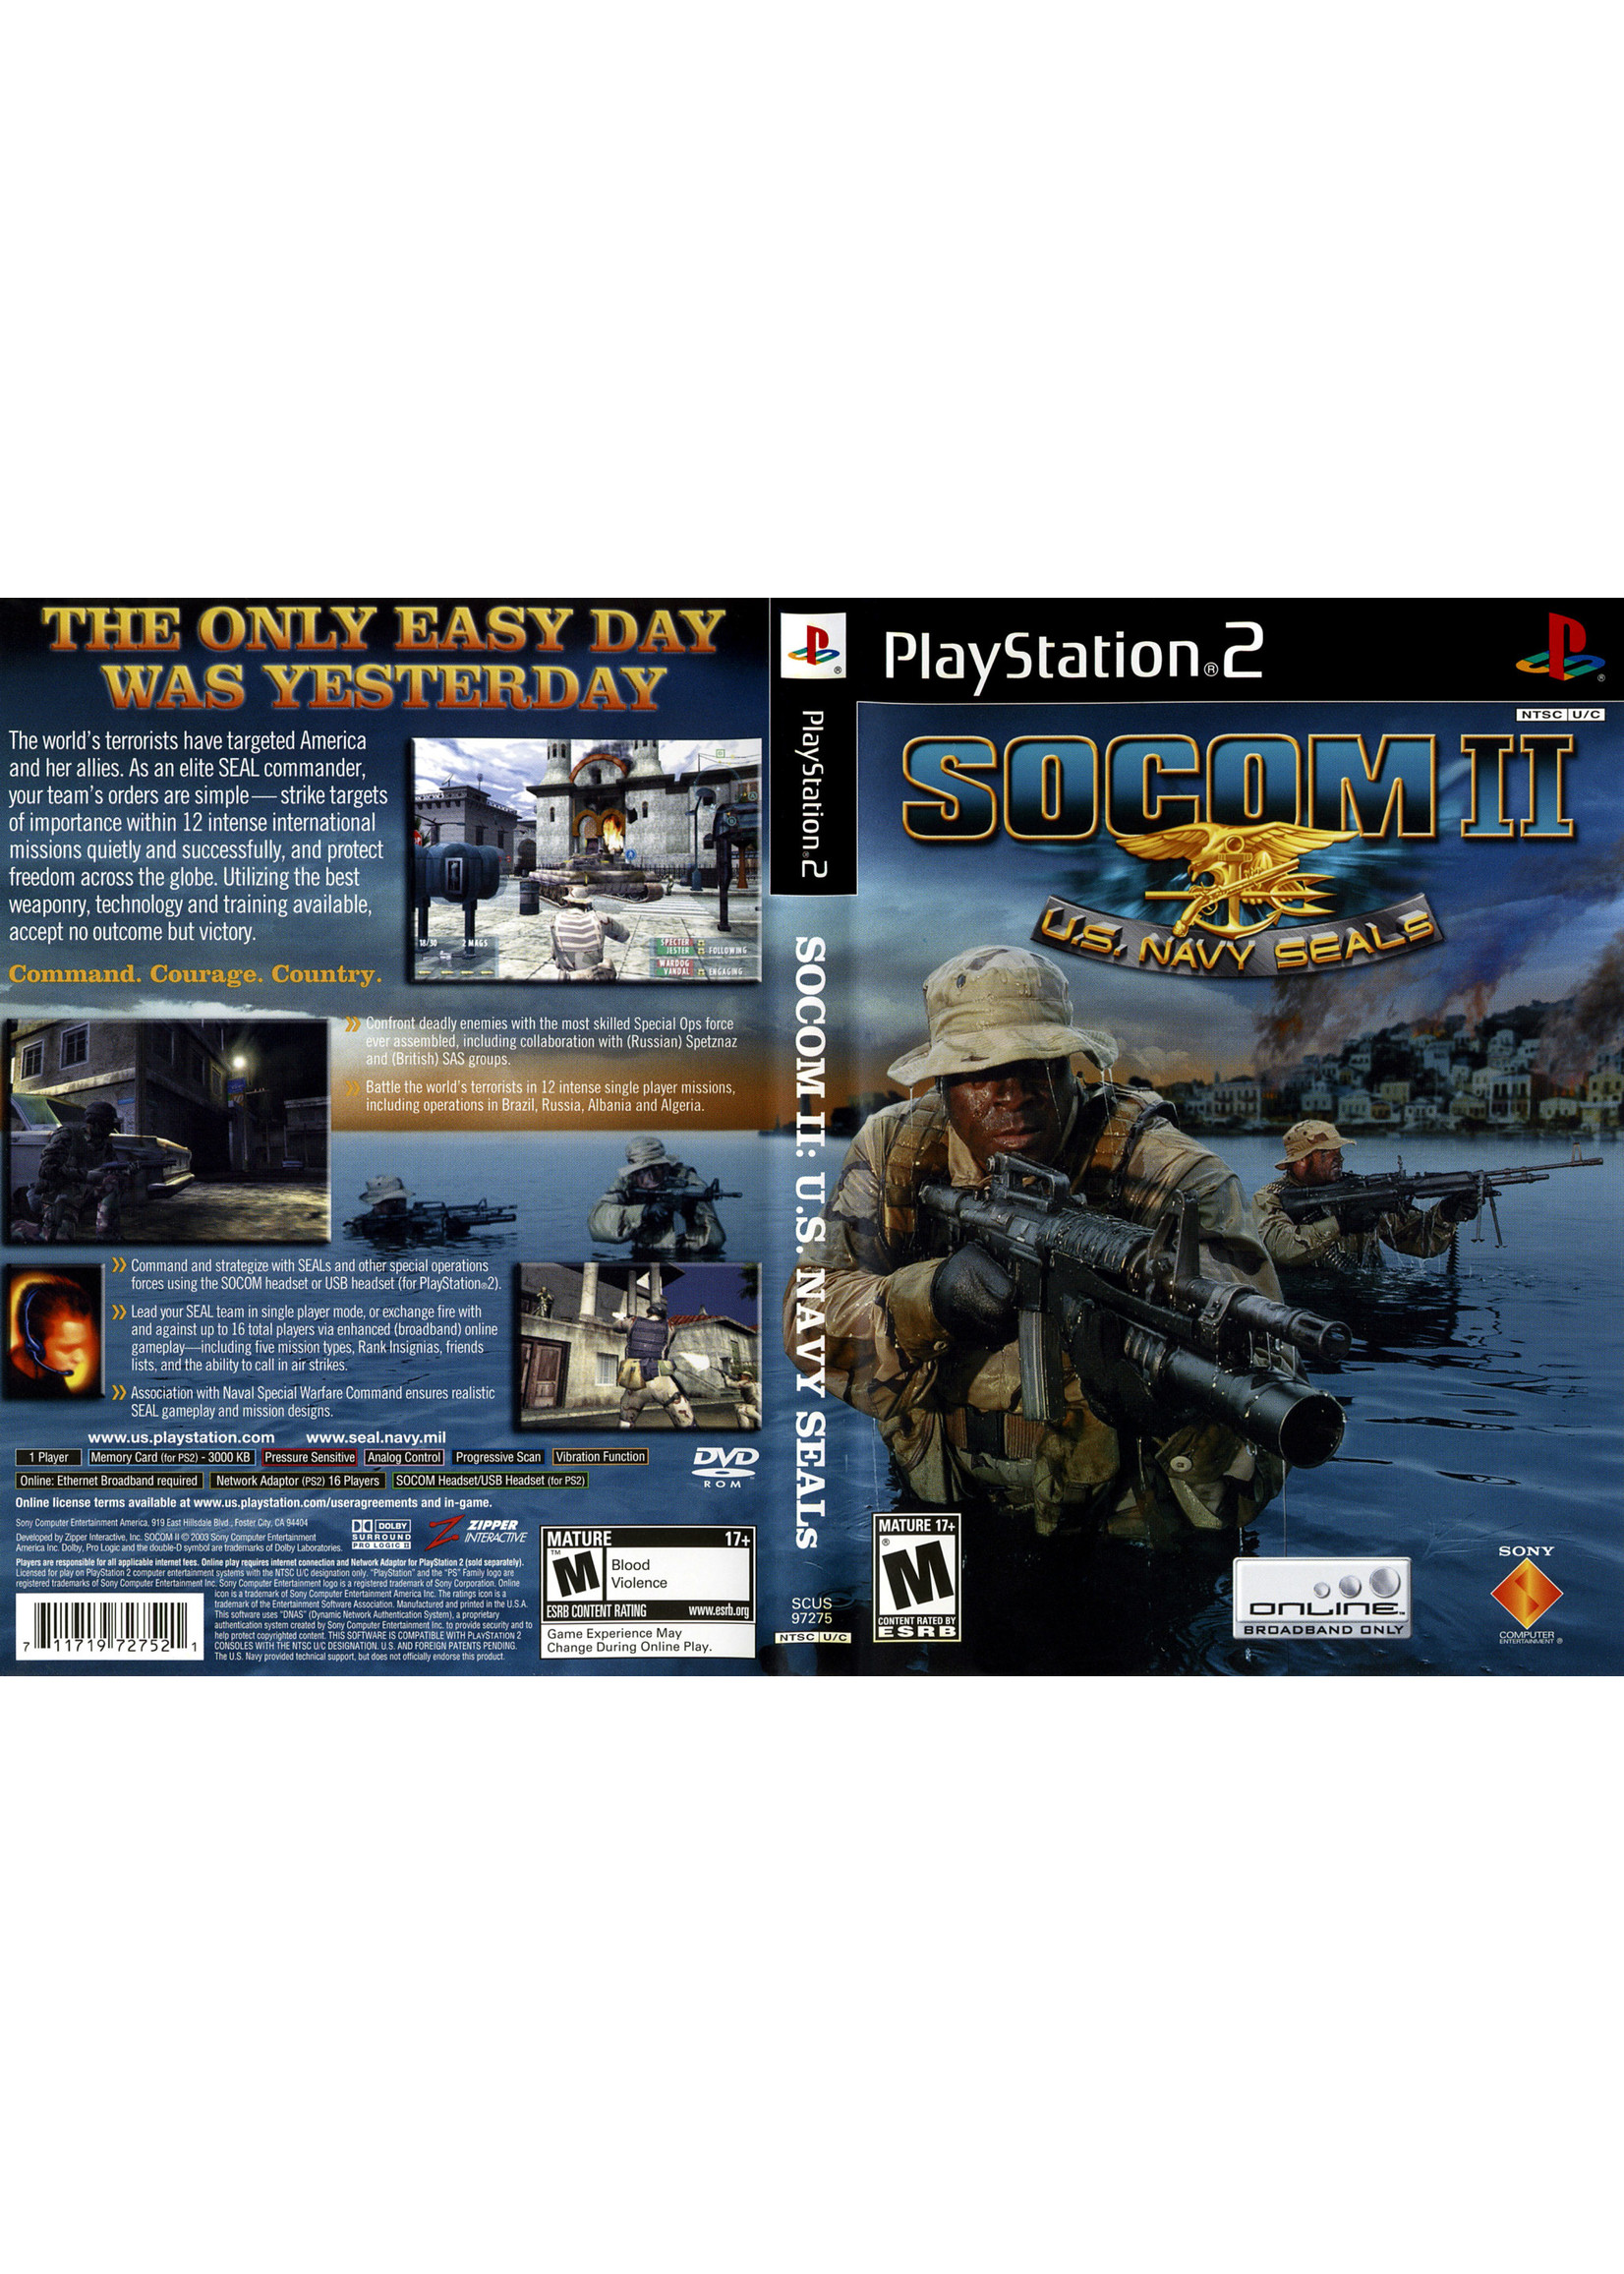 Sony Playstation 2 (PS2) SOCOM II US Navy Seals